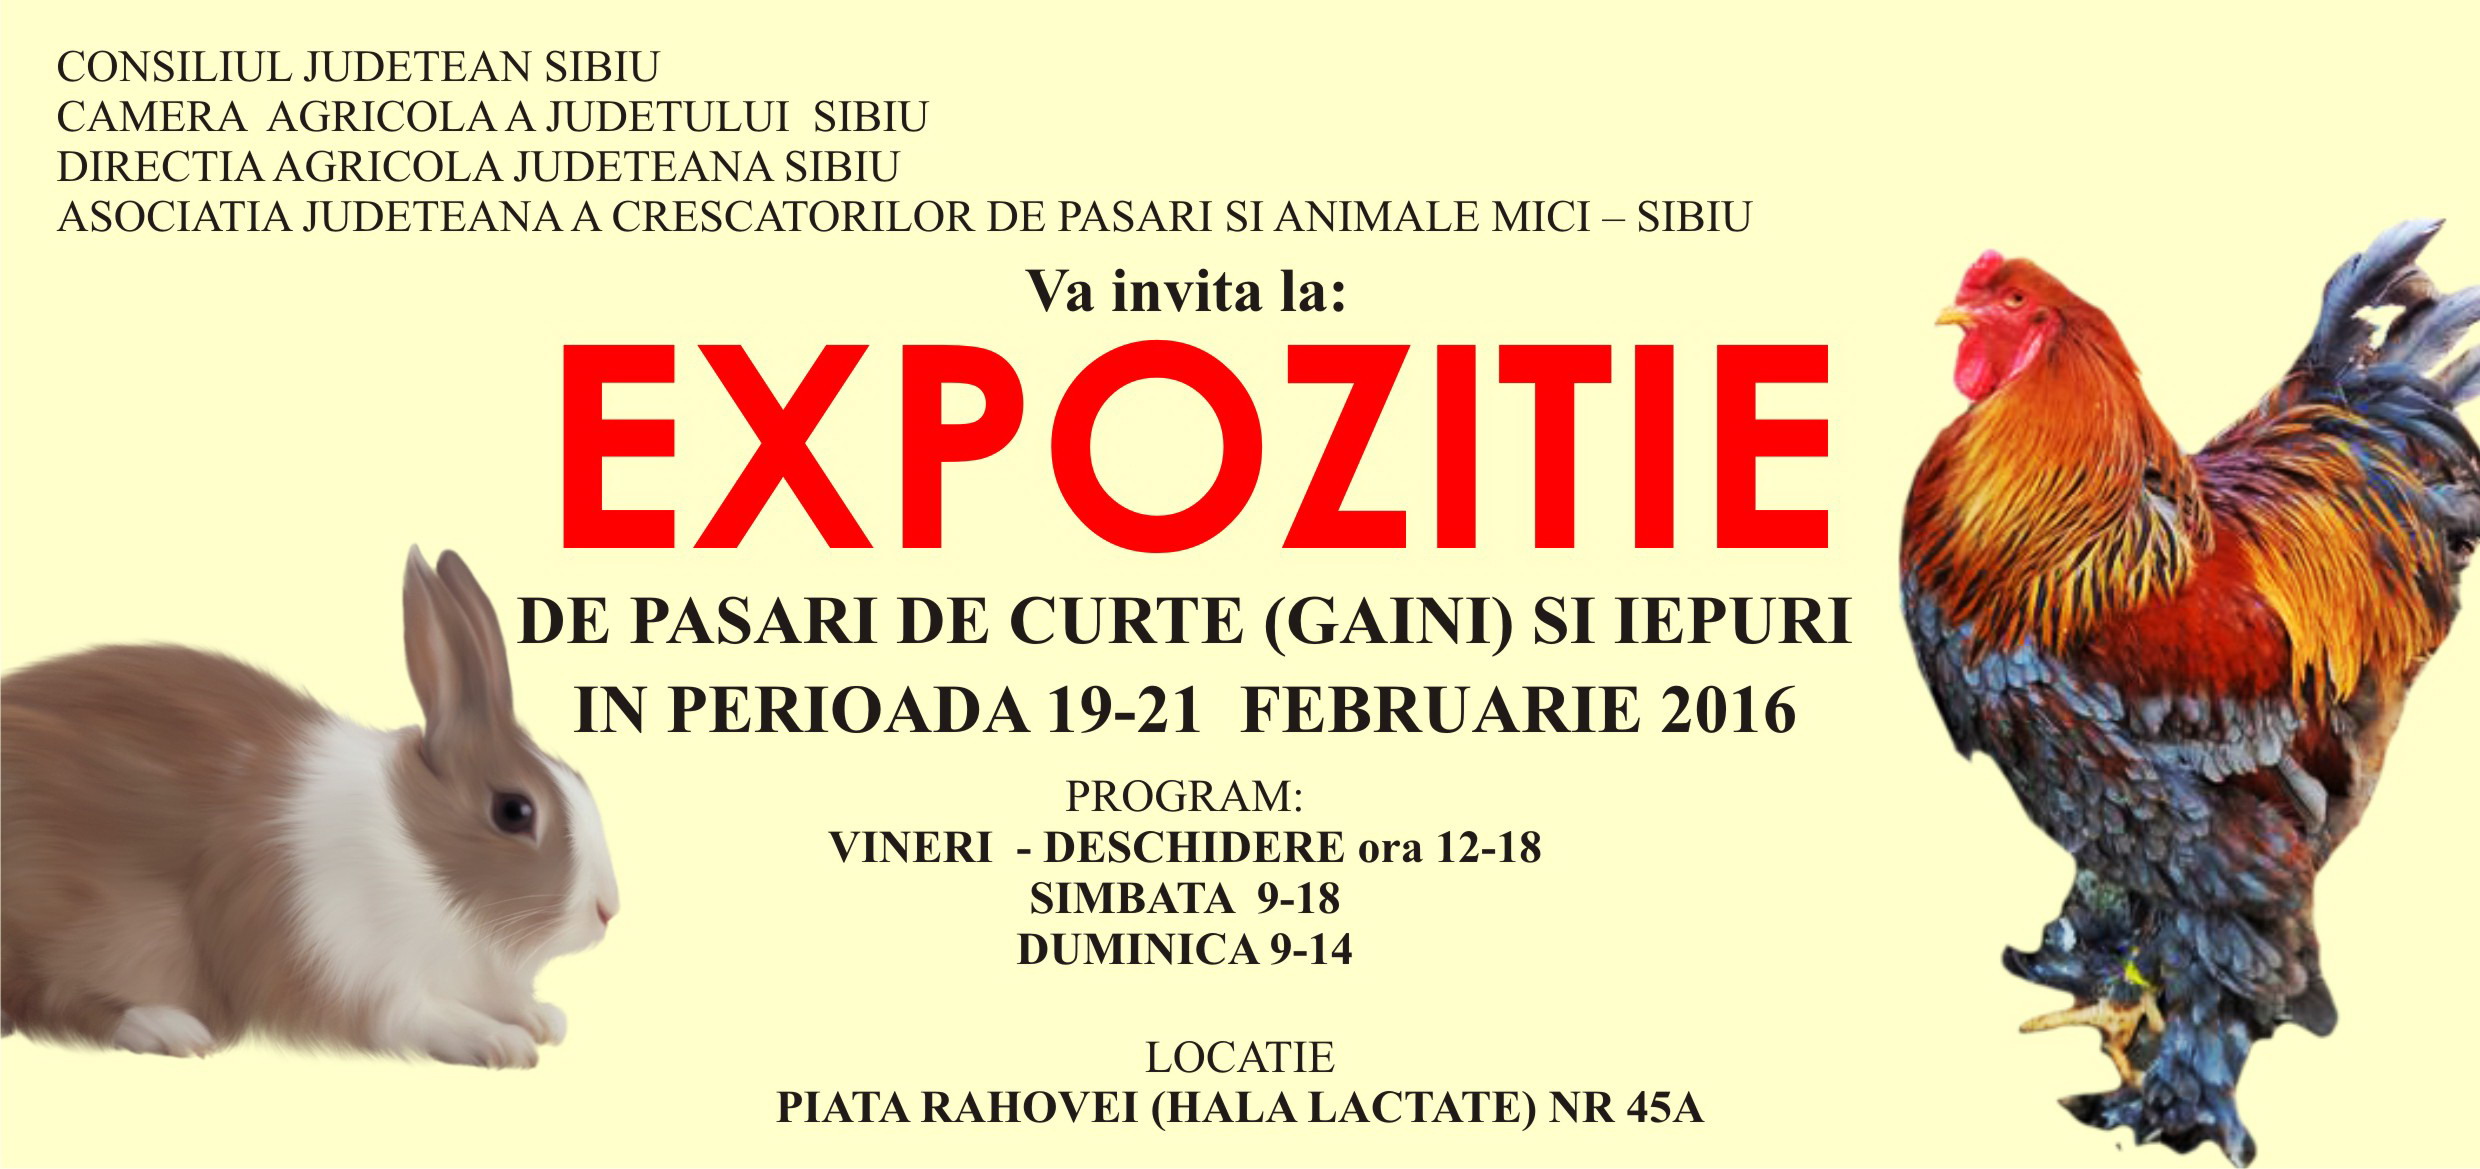 invitatie expo 2016